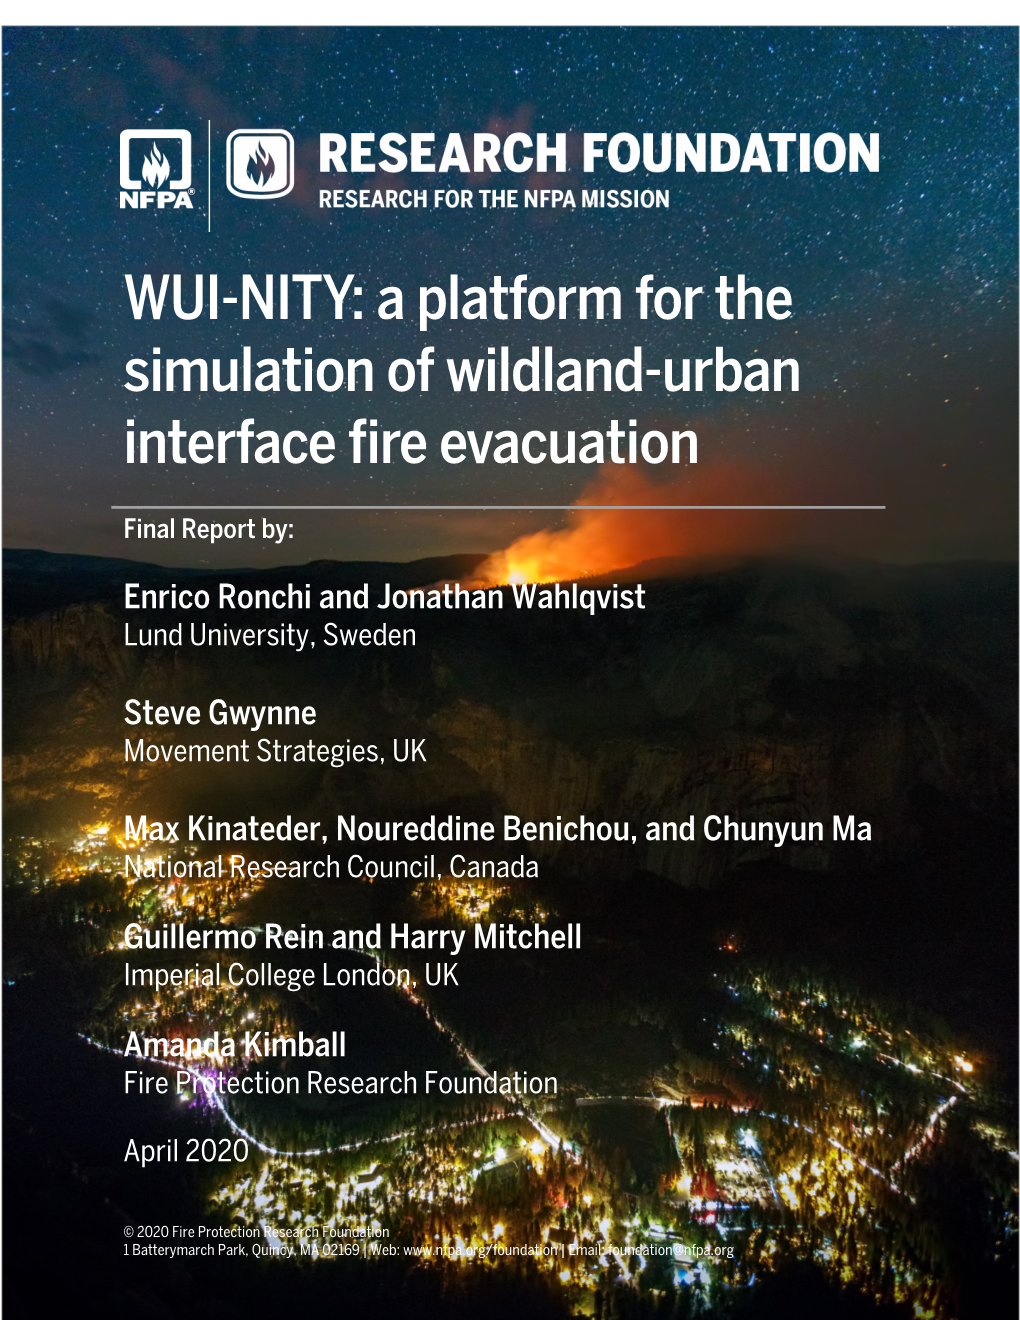 WUI-NITY: a Platform for the Simulation of Wildland-Urban Interface Fire Evacuation